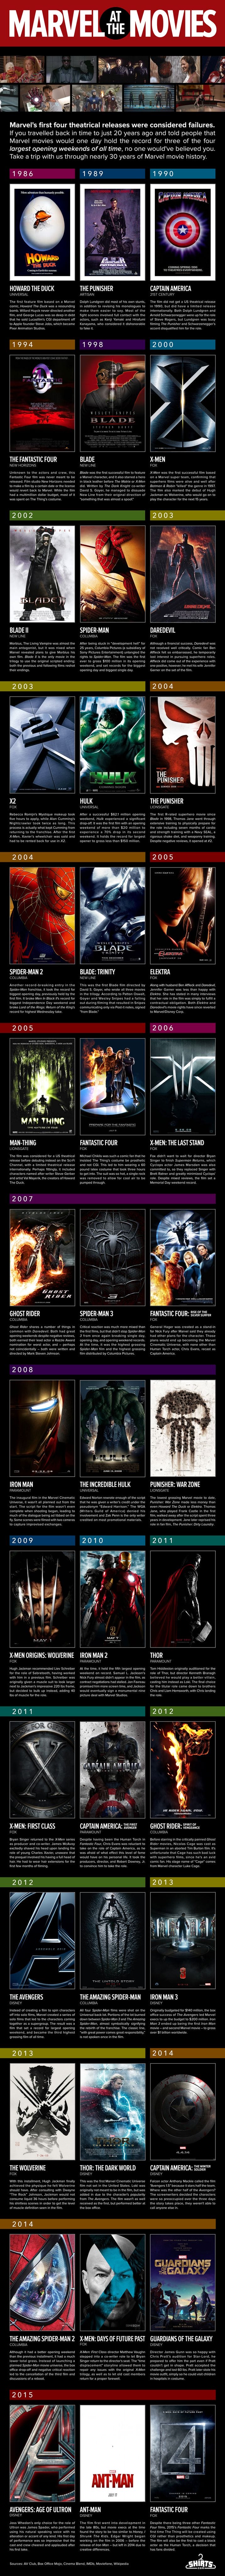 Marvel-Movies-Infographic